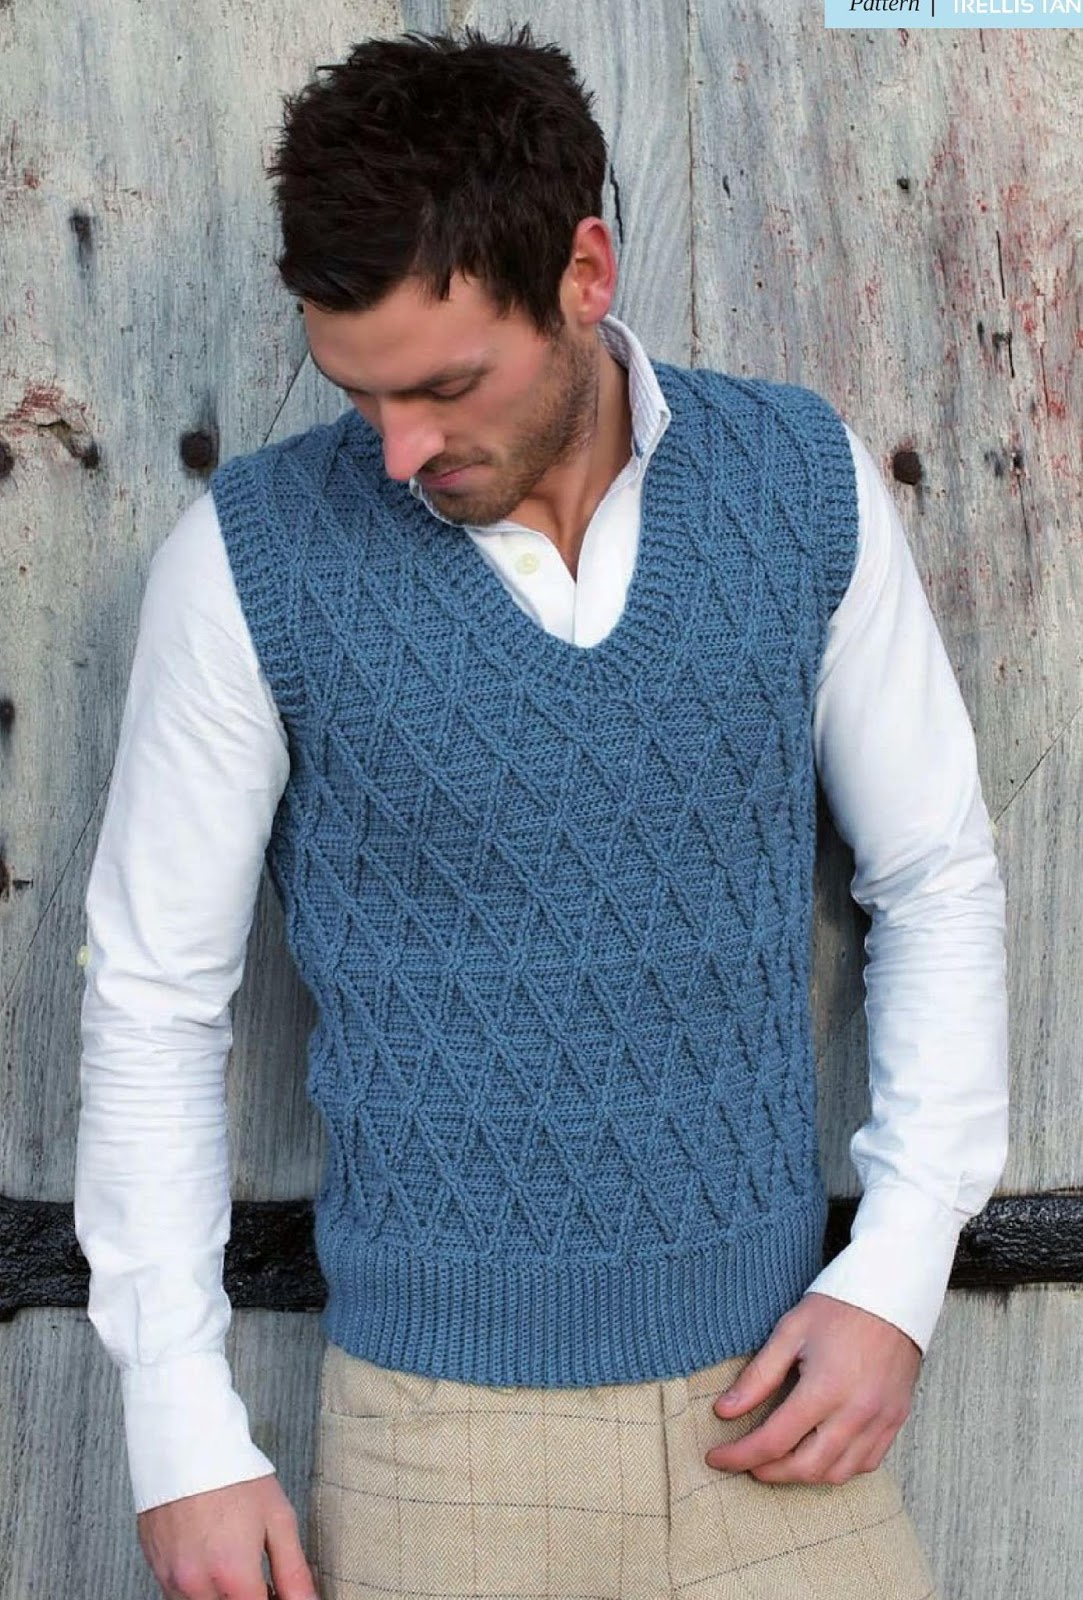 Free English |Crochet Patterns| for |Crochet Sweater| for men 2161